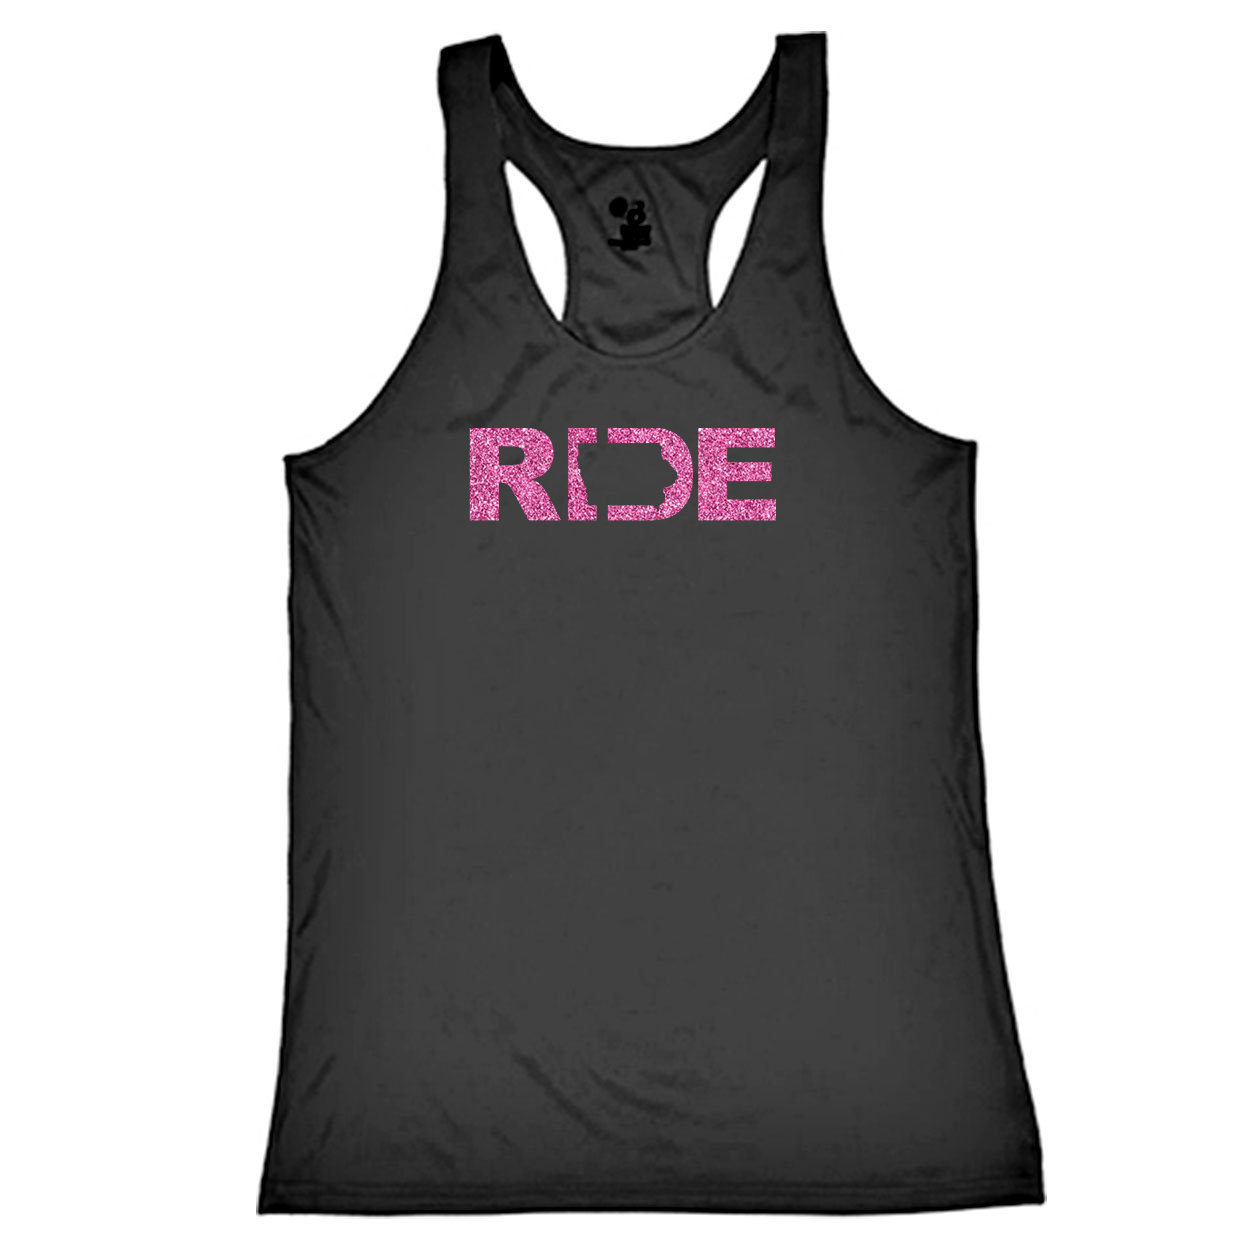 Ride Iowa Classic Youth Girls Performance Racerback Tank Top Black (Glitter Pink Logo)